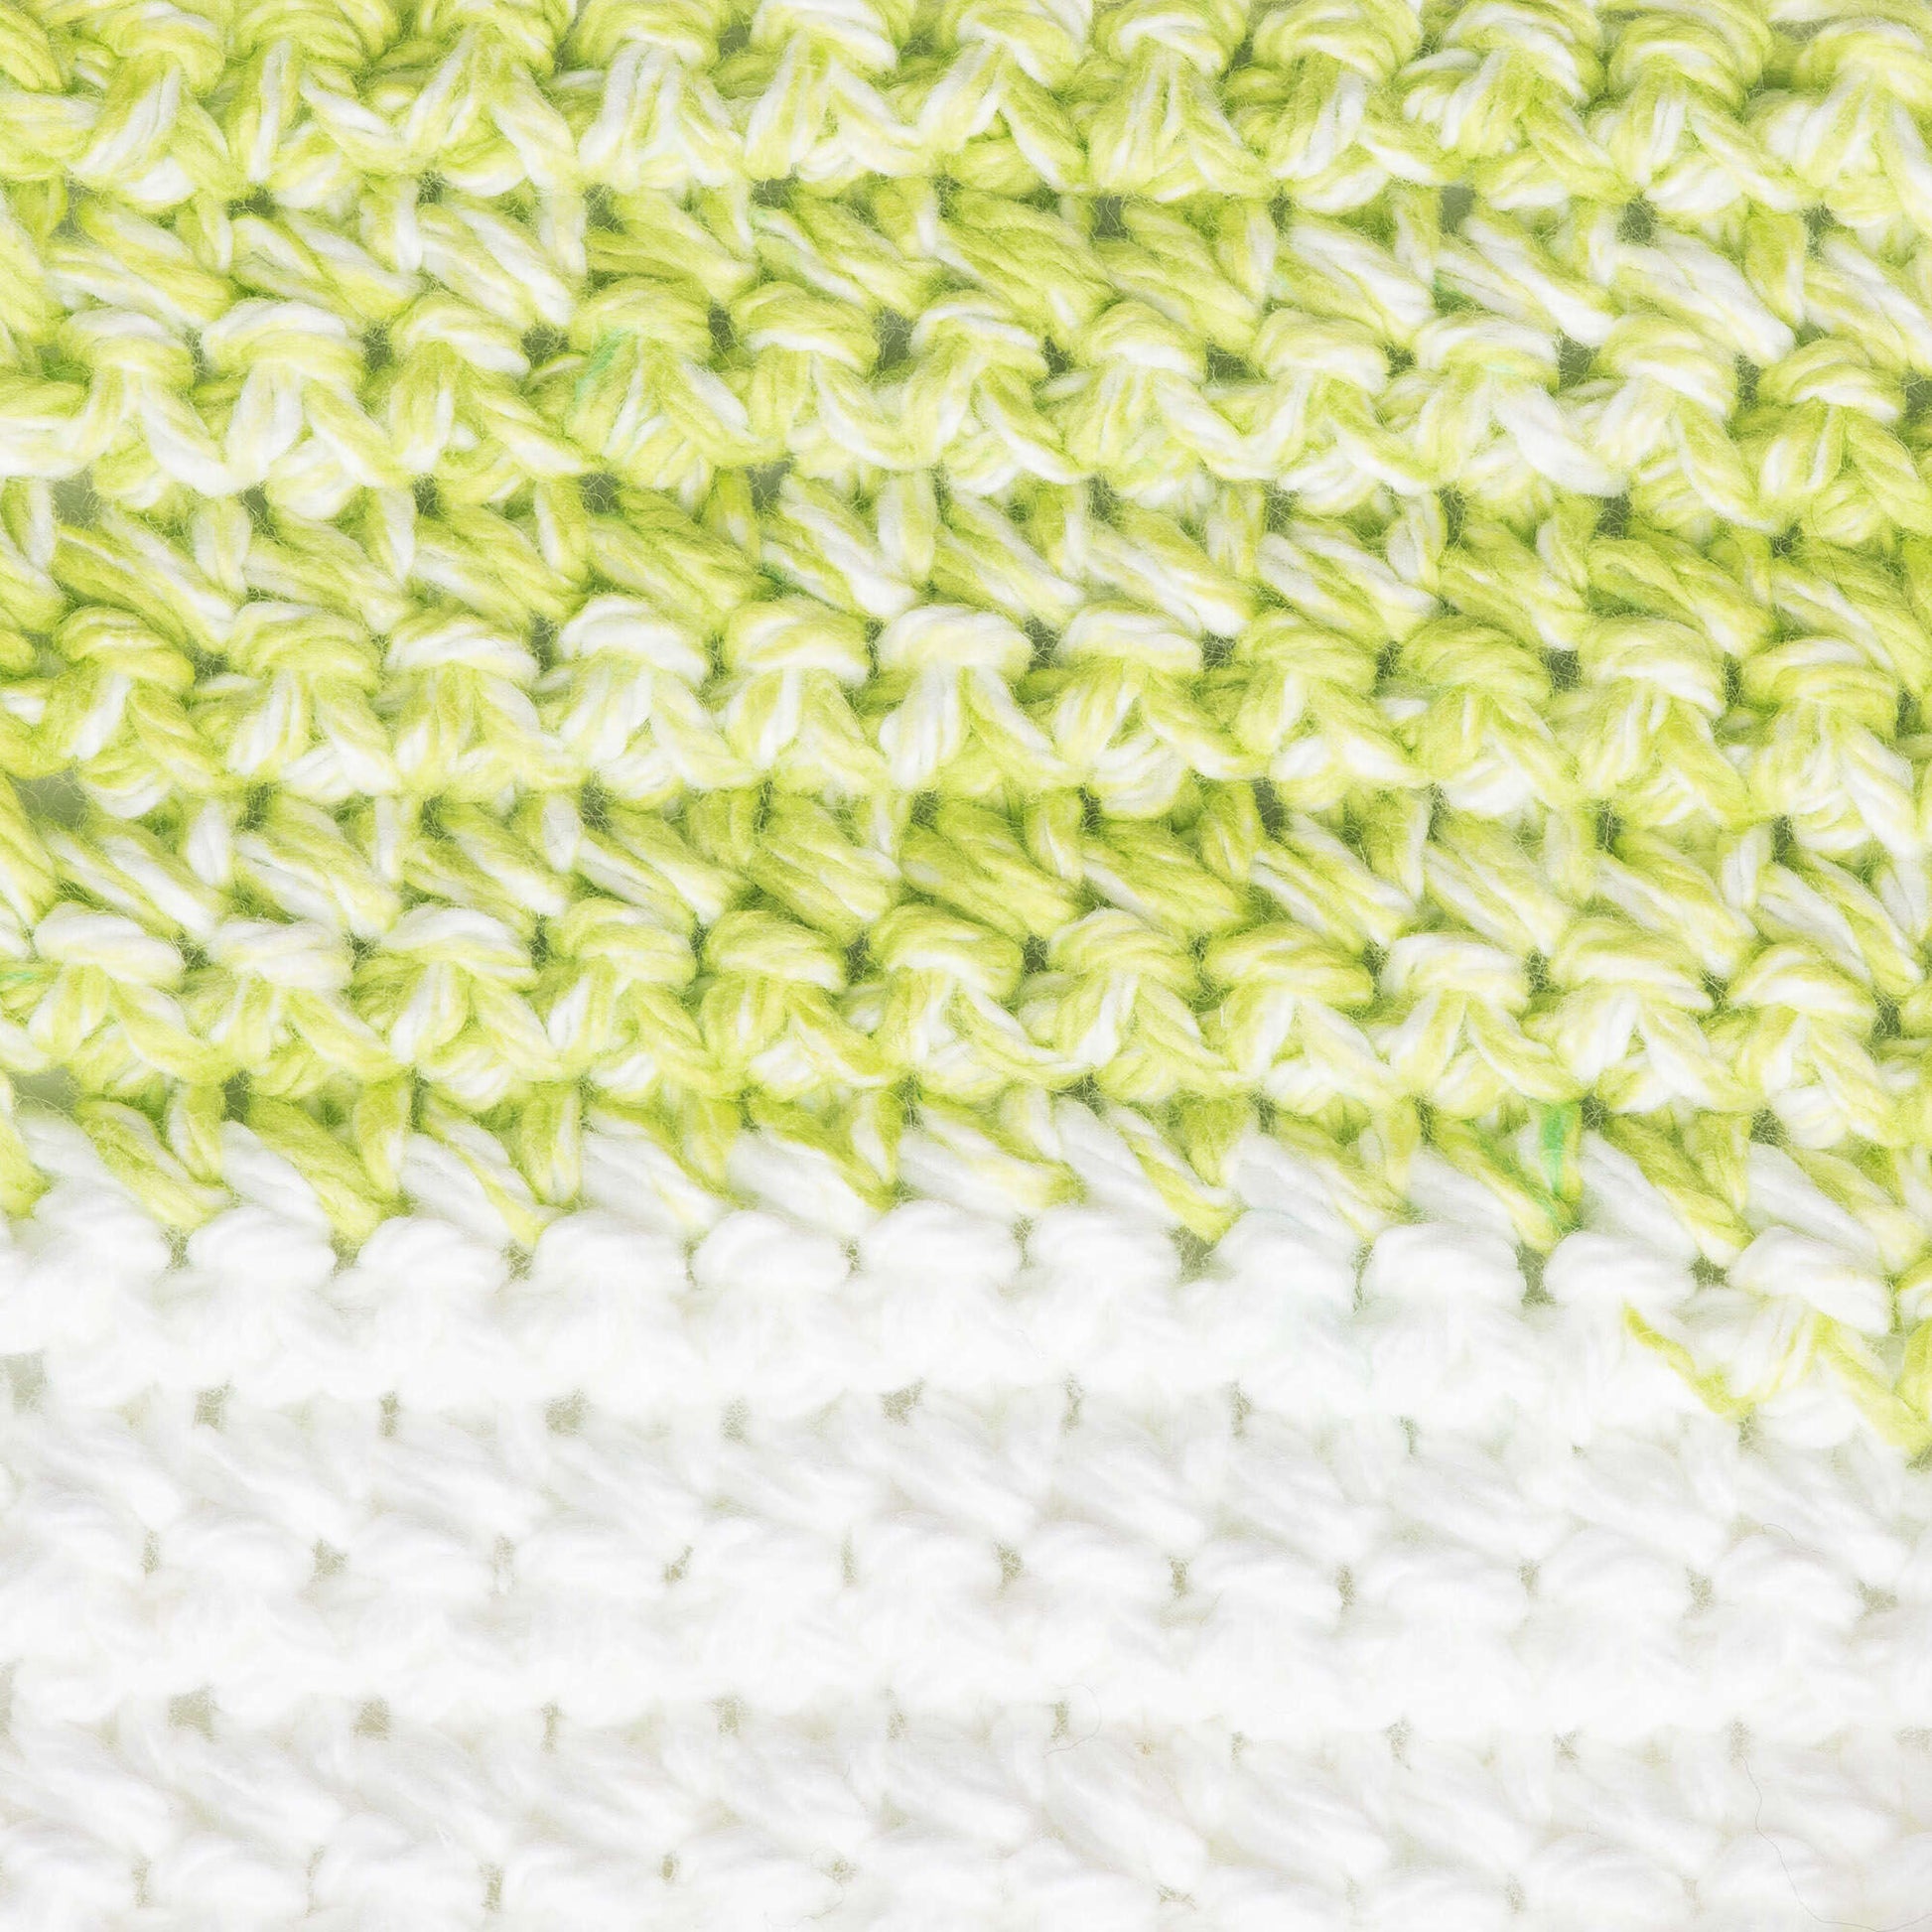 Bernat Handicrafter Cotton Stripes Yarn - Discontinued Shades